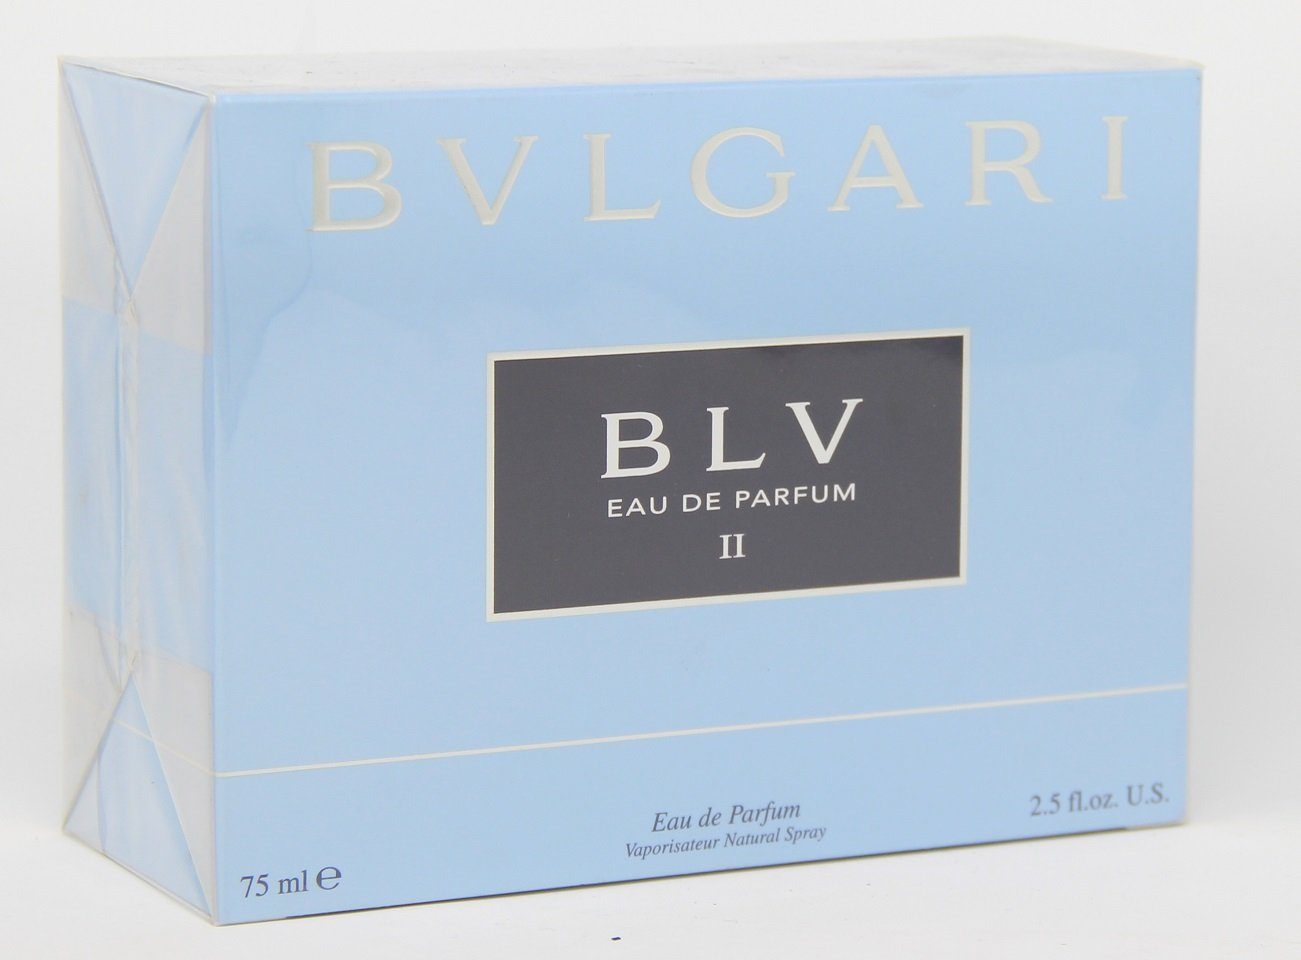 BLV Bvlgari Parfum Eau de Parfum Eau 75 de Spray BVLGARI ml 2